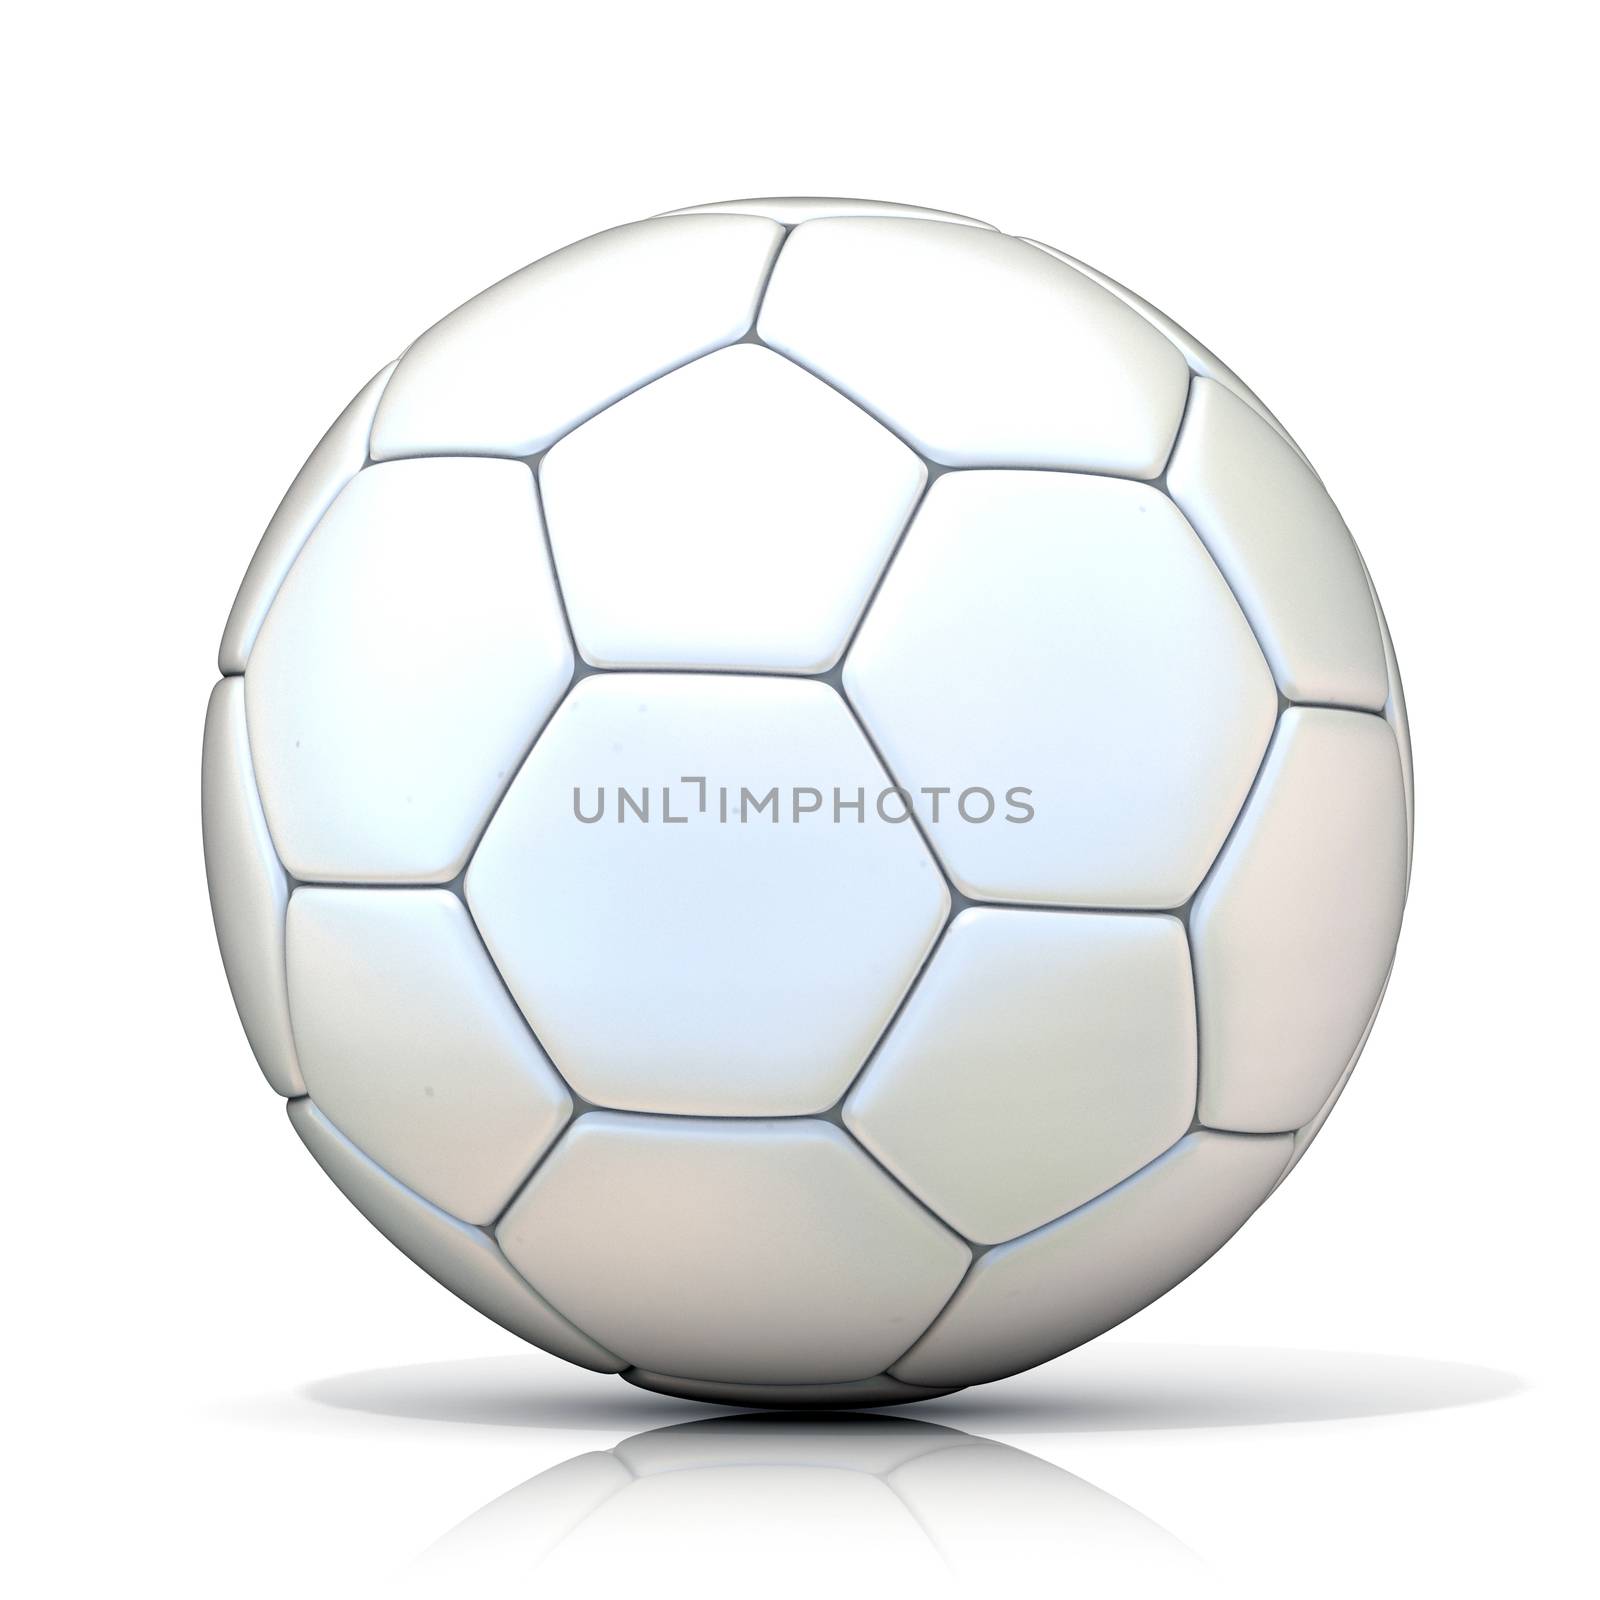 White football - soccer ball, isolated on white background.